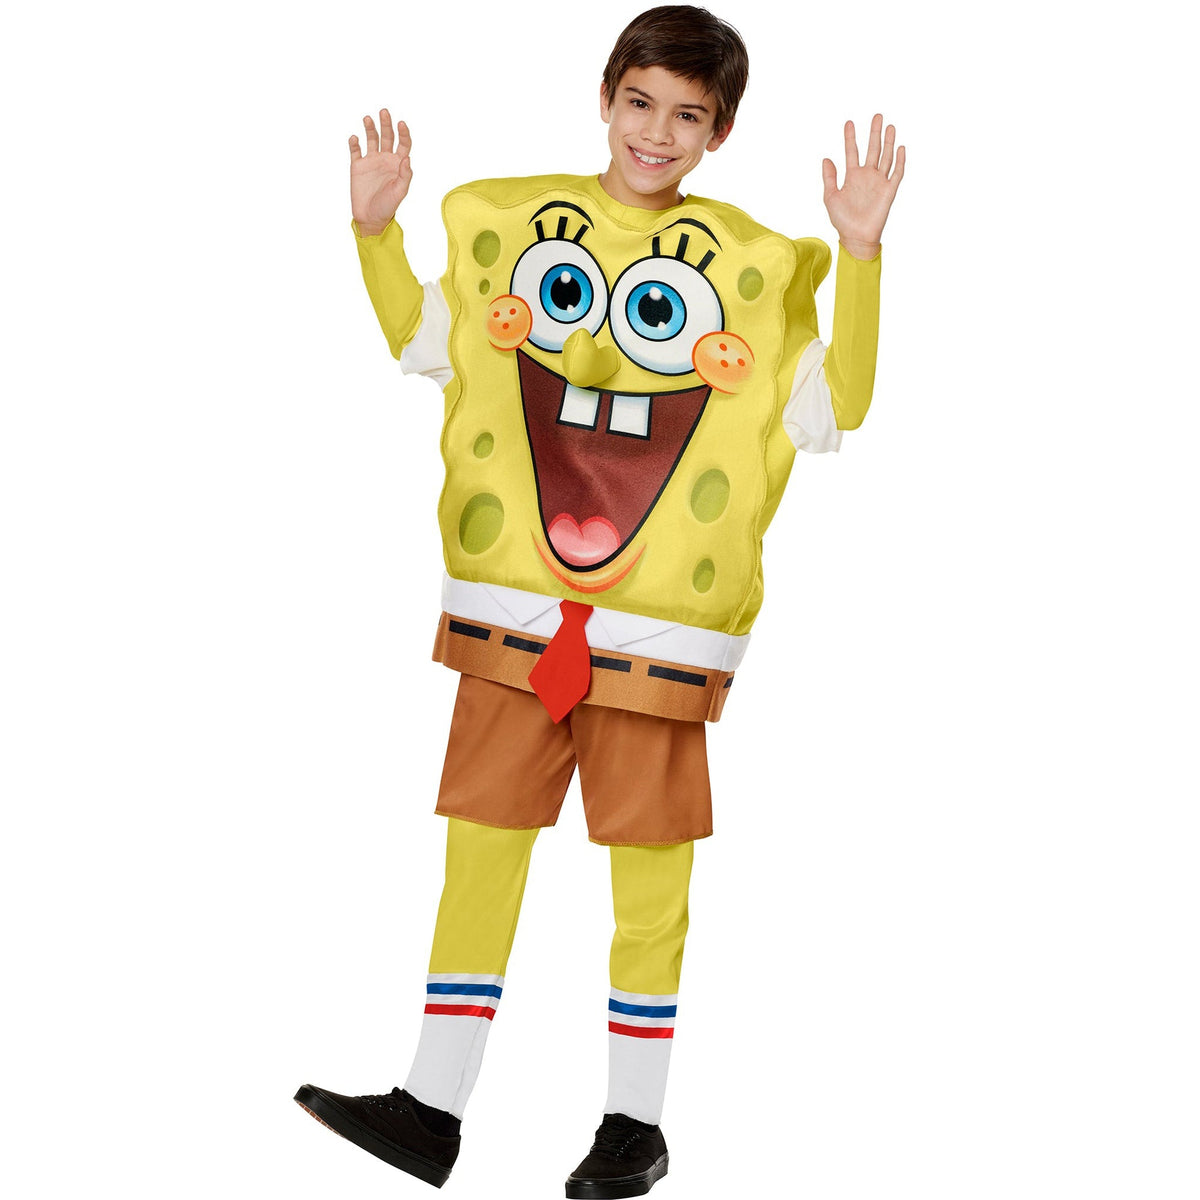 IN SPIRIT DESIGNS Costumes SpongeBob Costume for Kids, SpongeBob SquarePants, Tunic and Pants